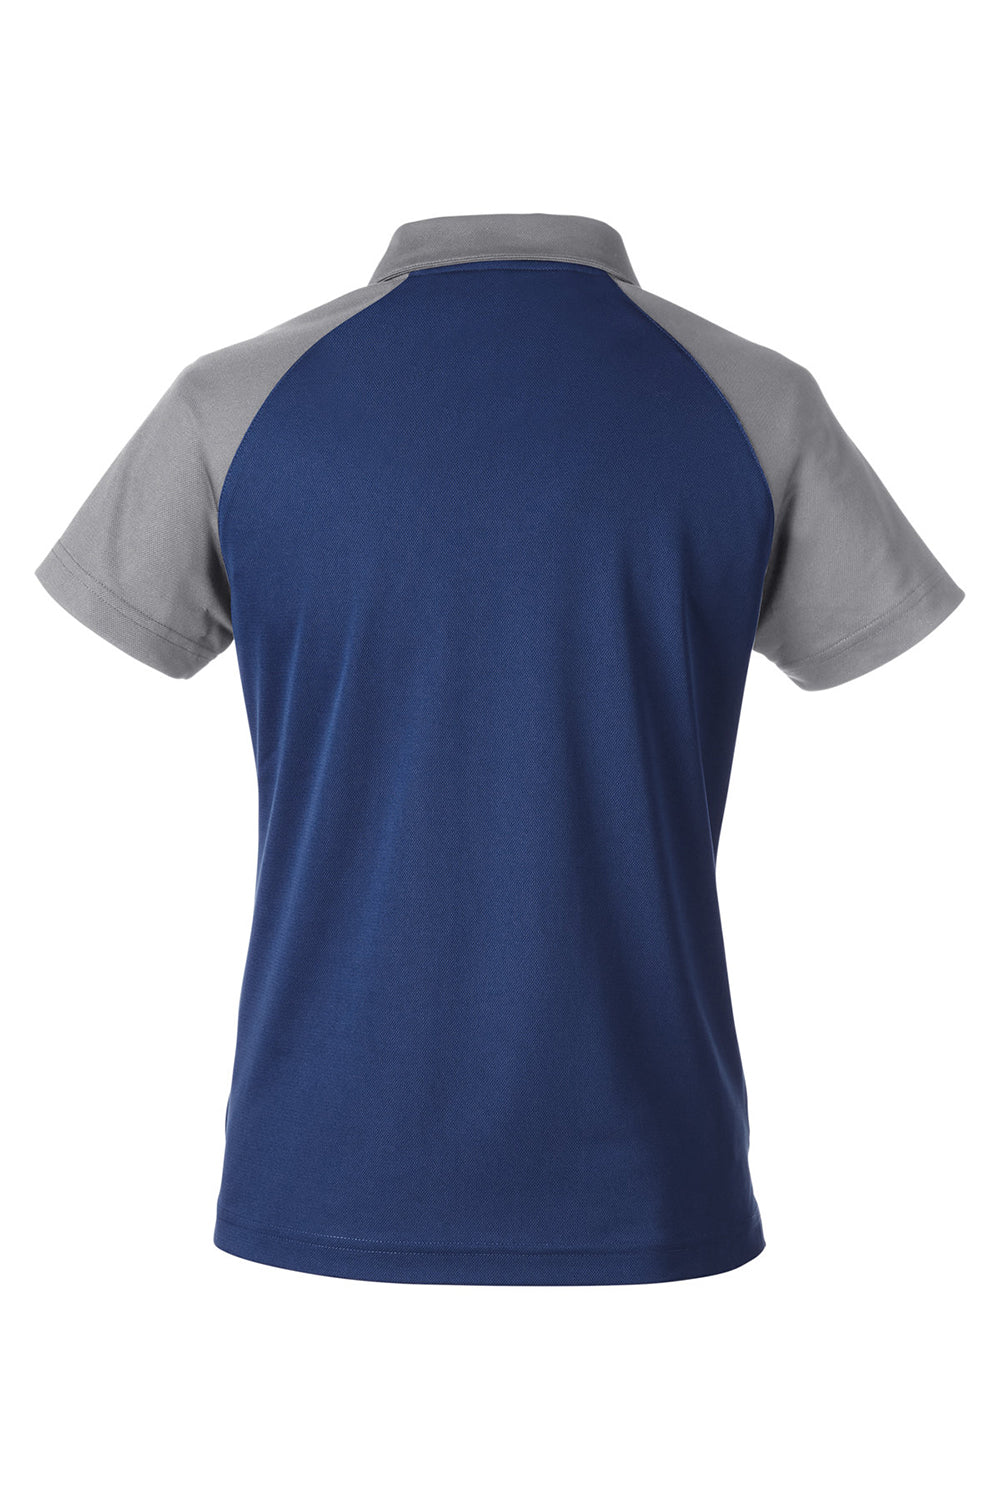 Team 365 TT21CW Womens Command Colorblock Moisture Wicking Short Sleeve Polo Shirt Dark Navy Blue/Graphite Grey Flat Back